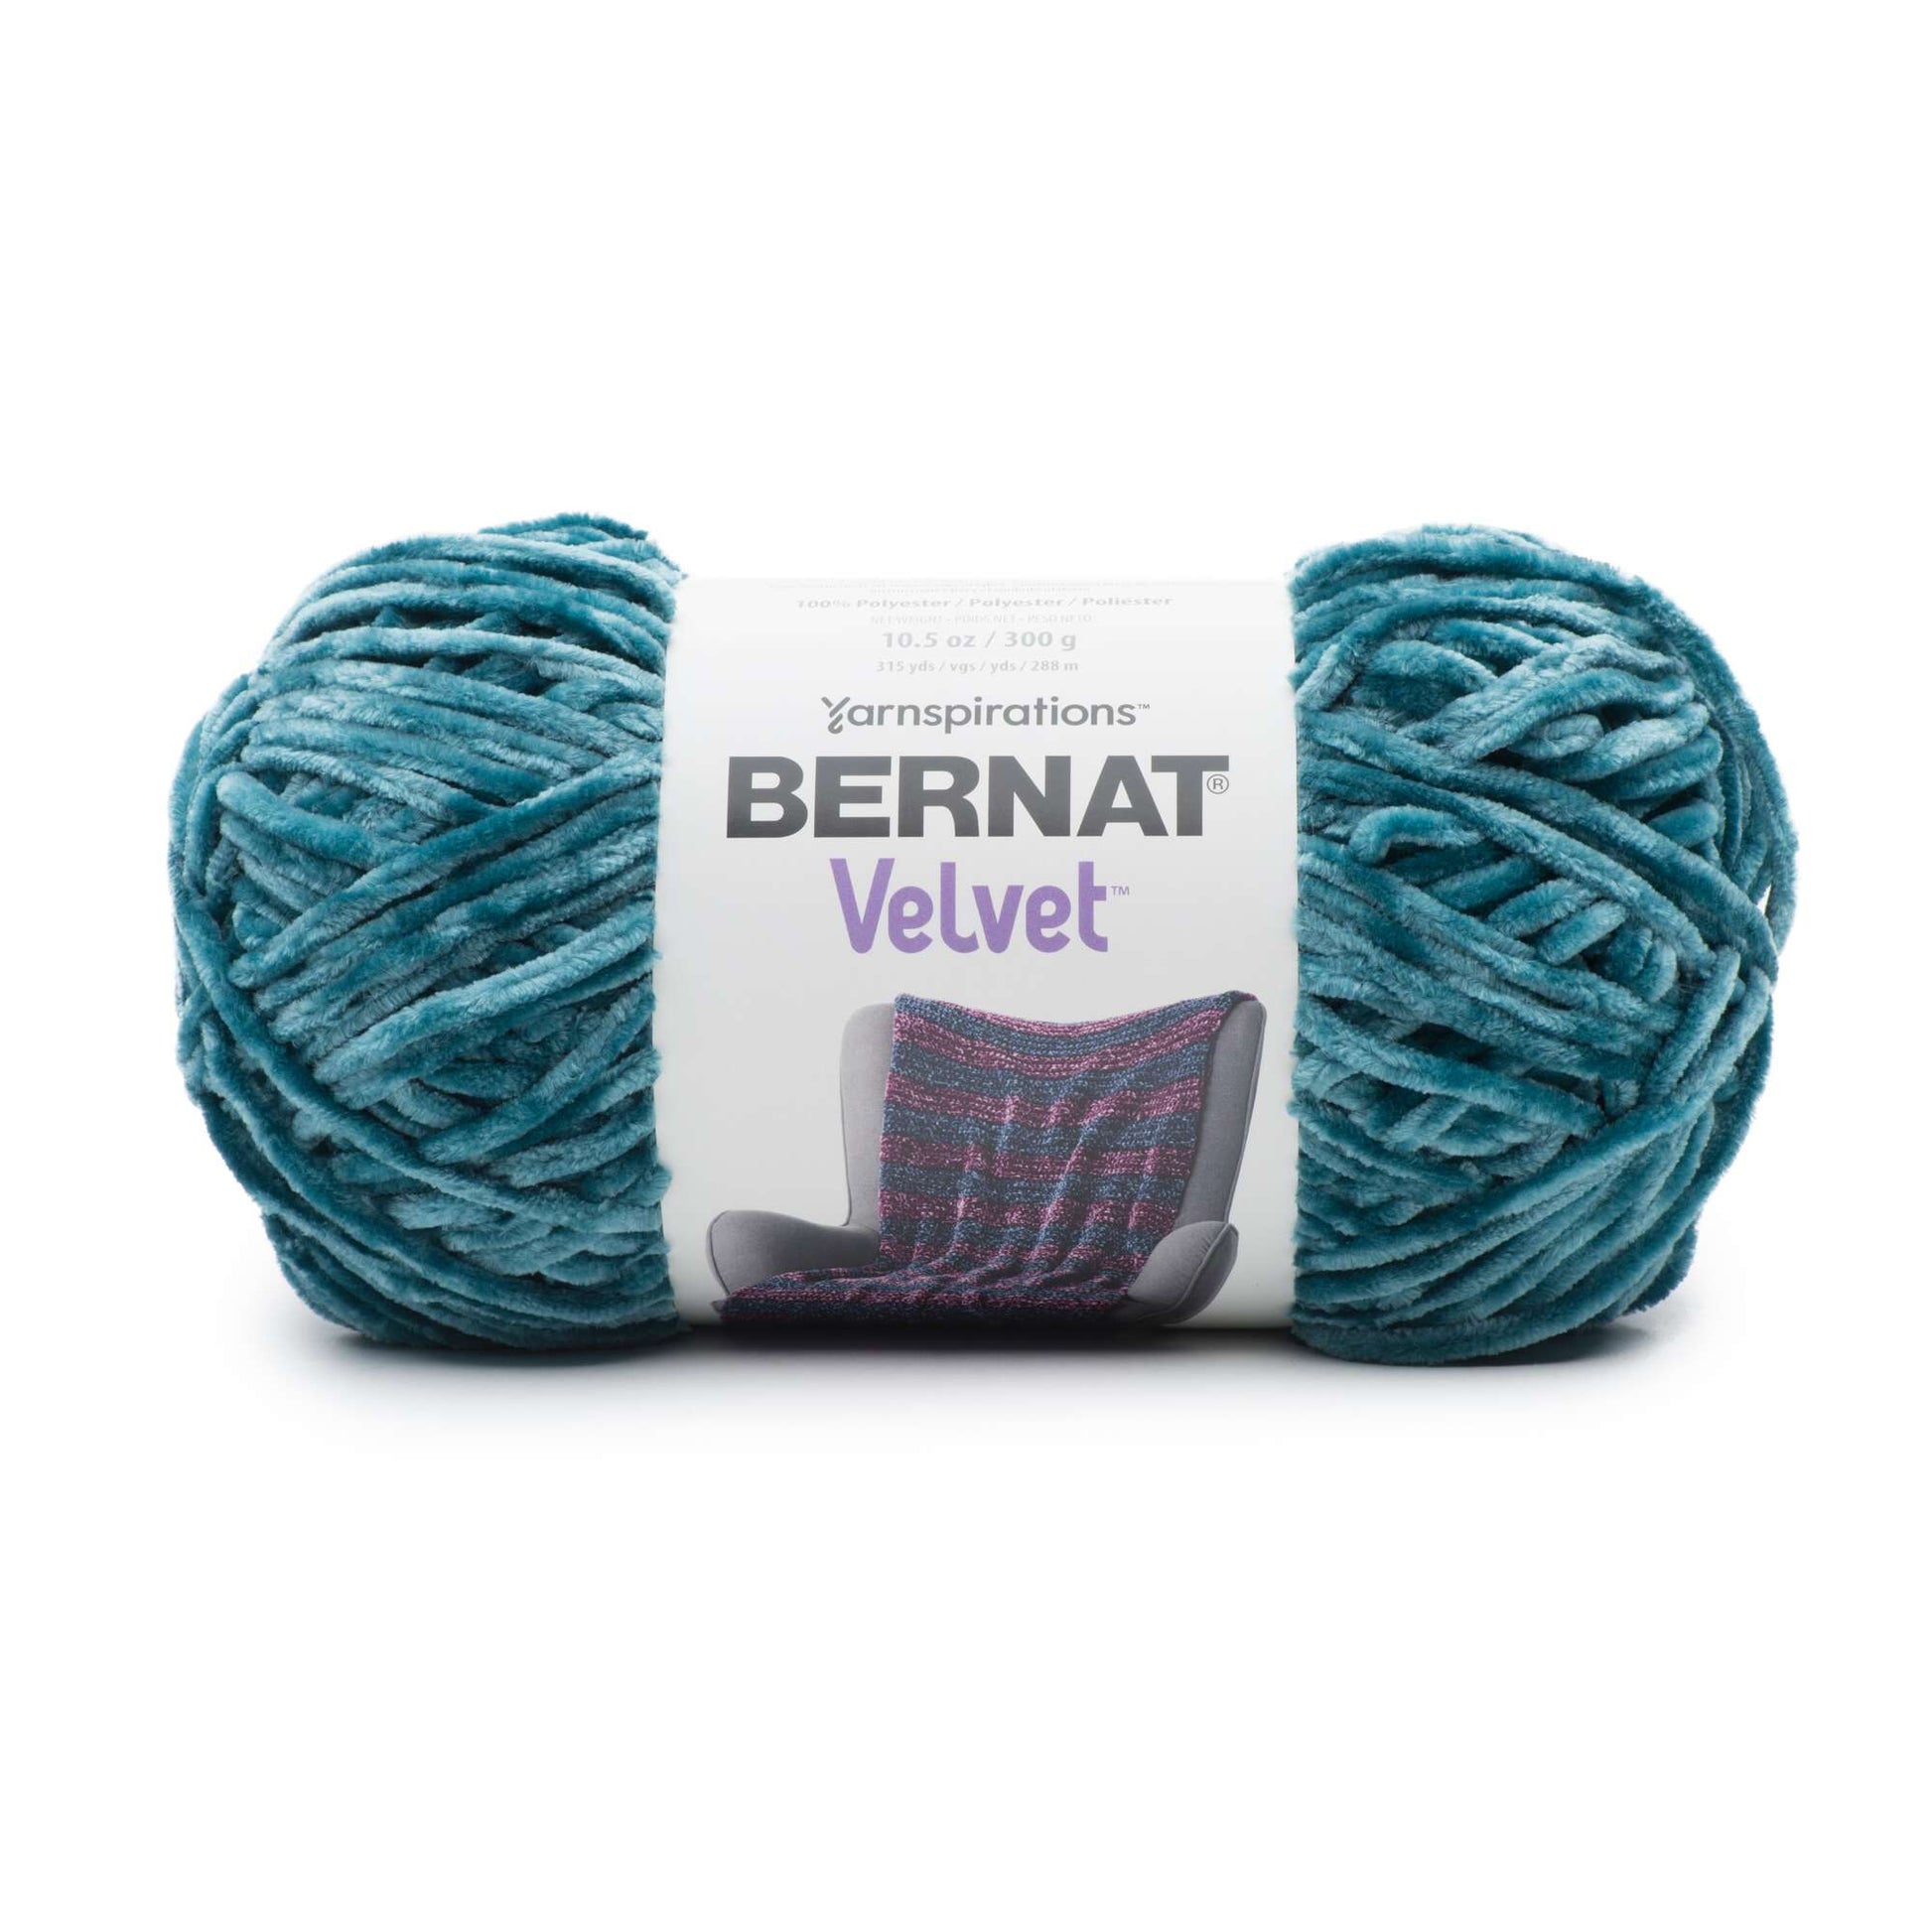 Bernat Velvet Yarn, Yarnspirations